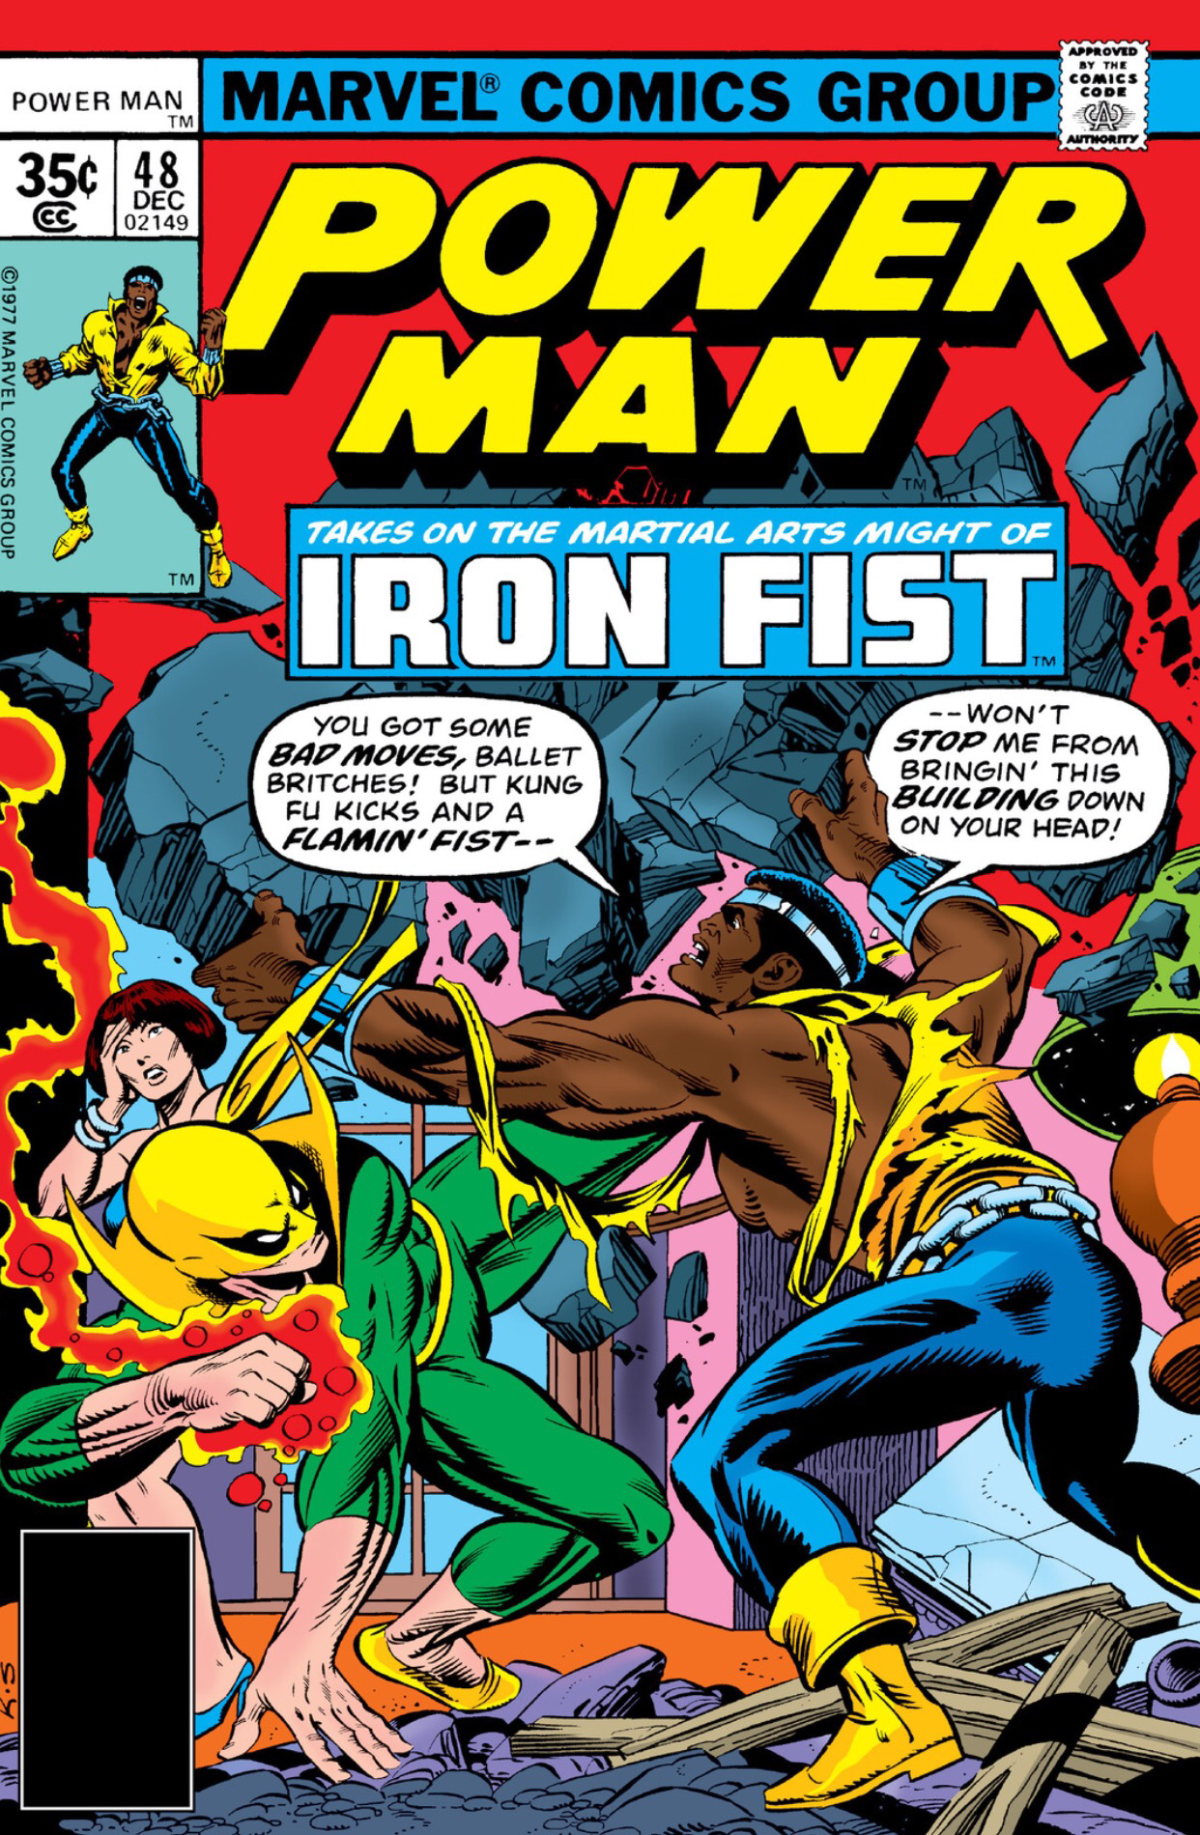 Power-Man Vs. Iron Fist